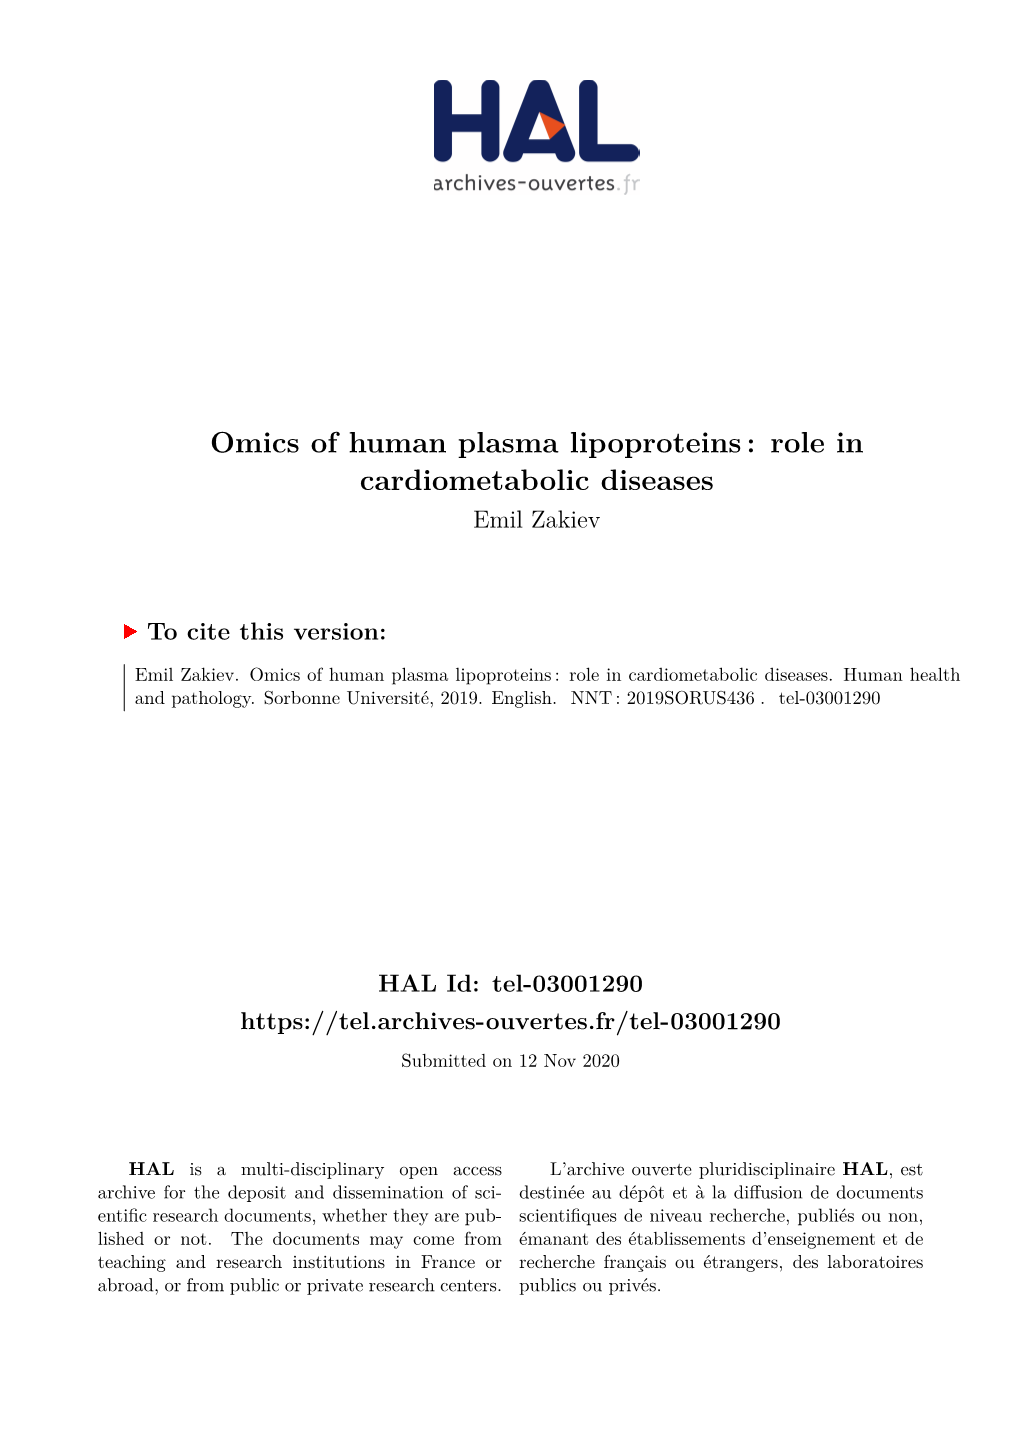 Omics of Human Plasma Lipoproteins: Role in Cardiometabolic Diseases